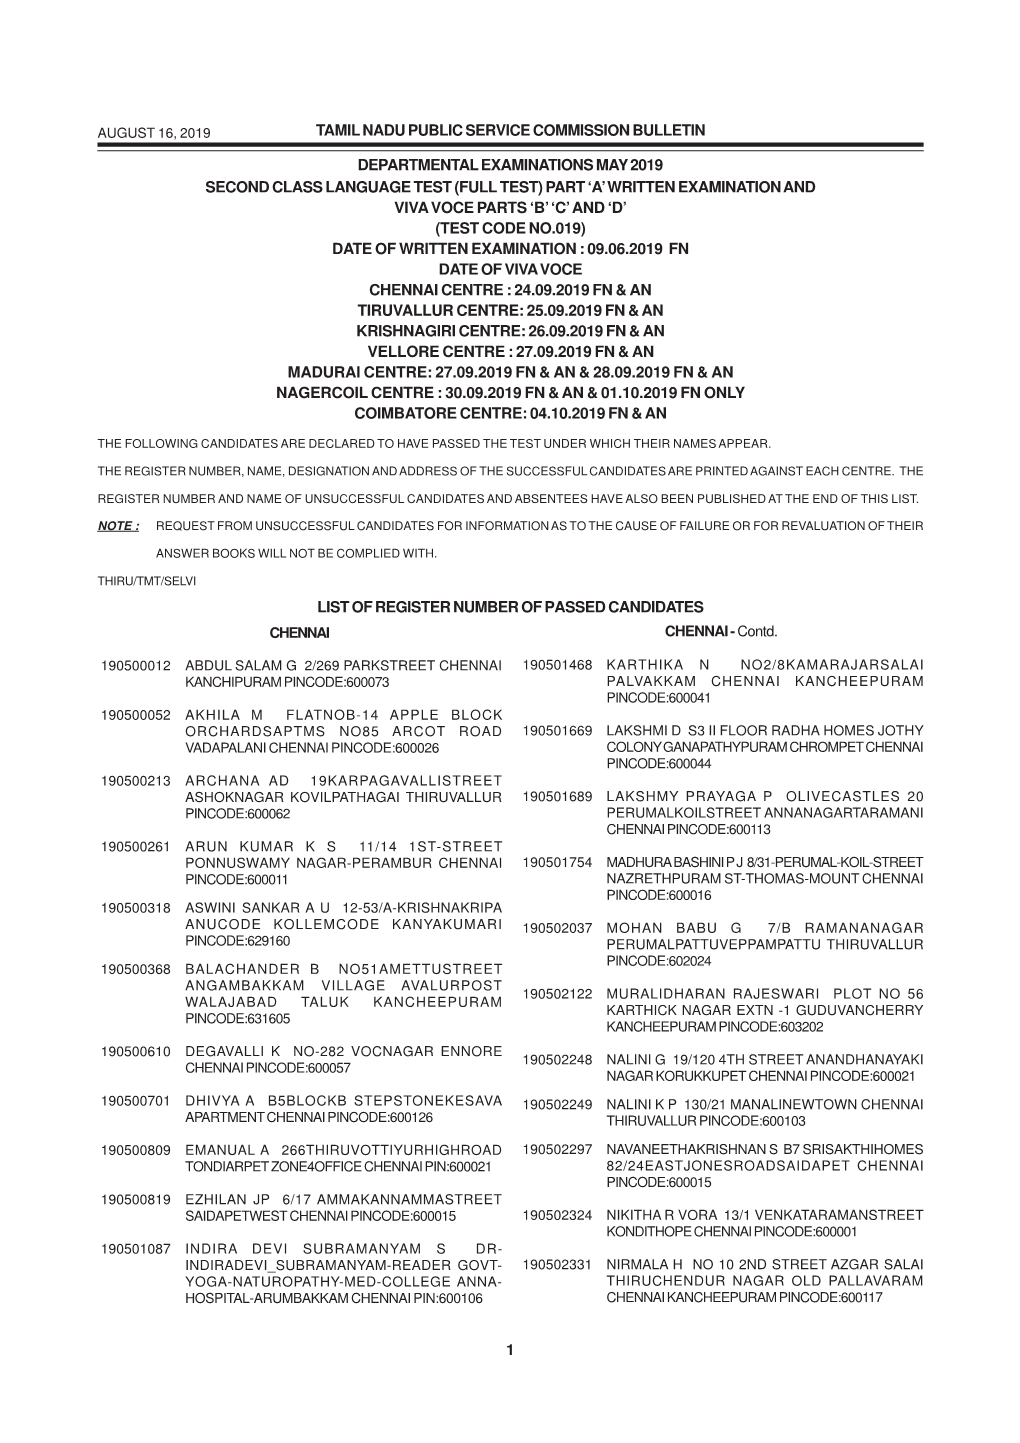 Departmental Examinations May 2019 Tamil Nadu Public